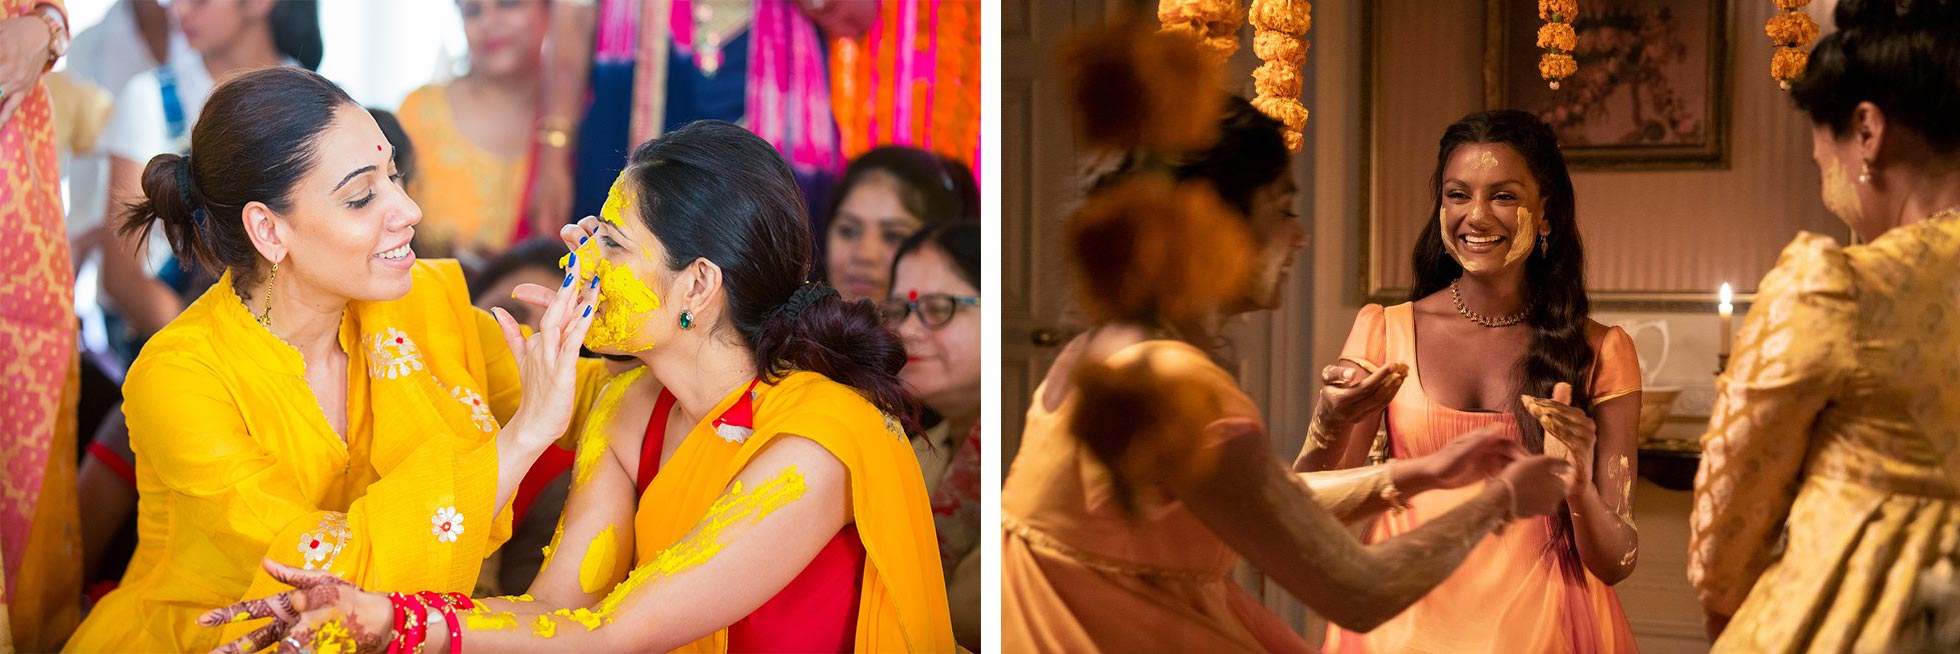 Indian Bride - Skicnare Ritual with Turmeric